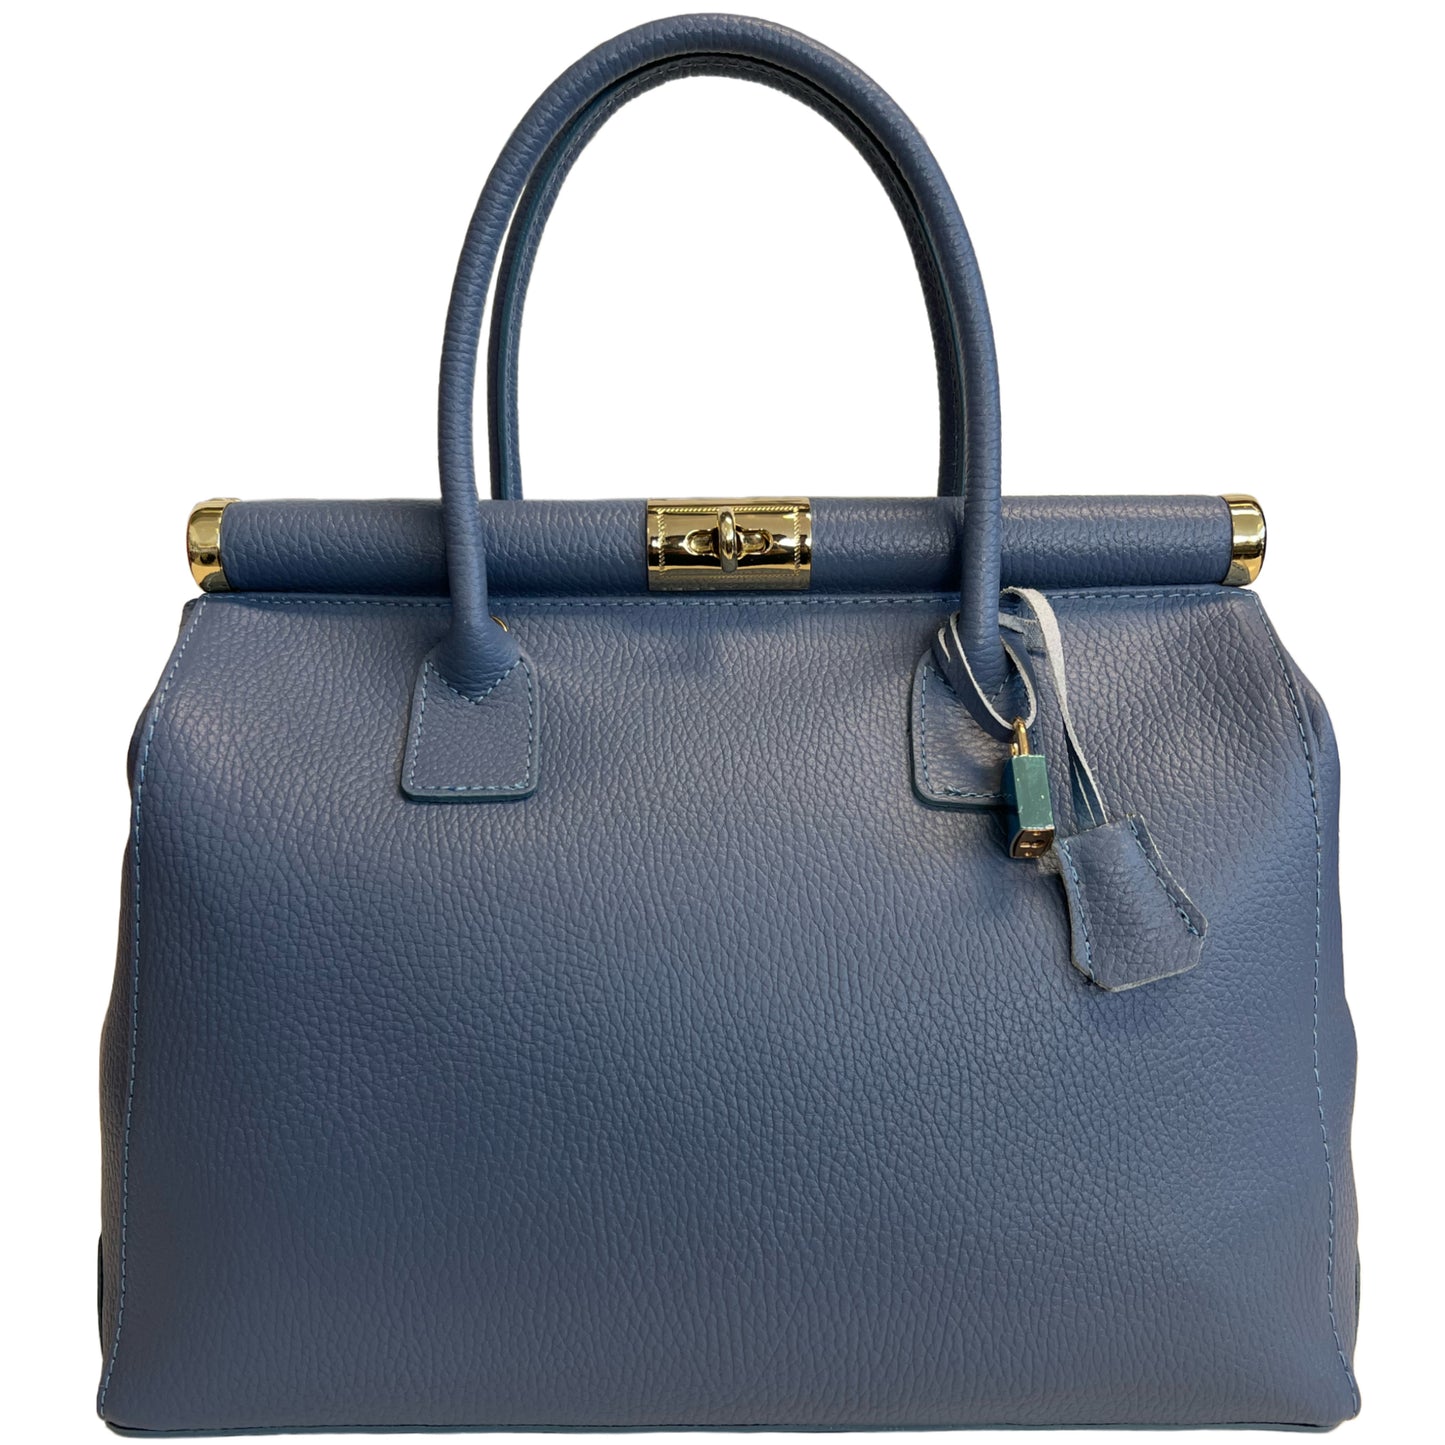 Modarno Handbag Borsa Donna a Mano Pelle con Tracolla Bauletto 35x28x16 cm